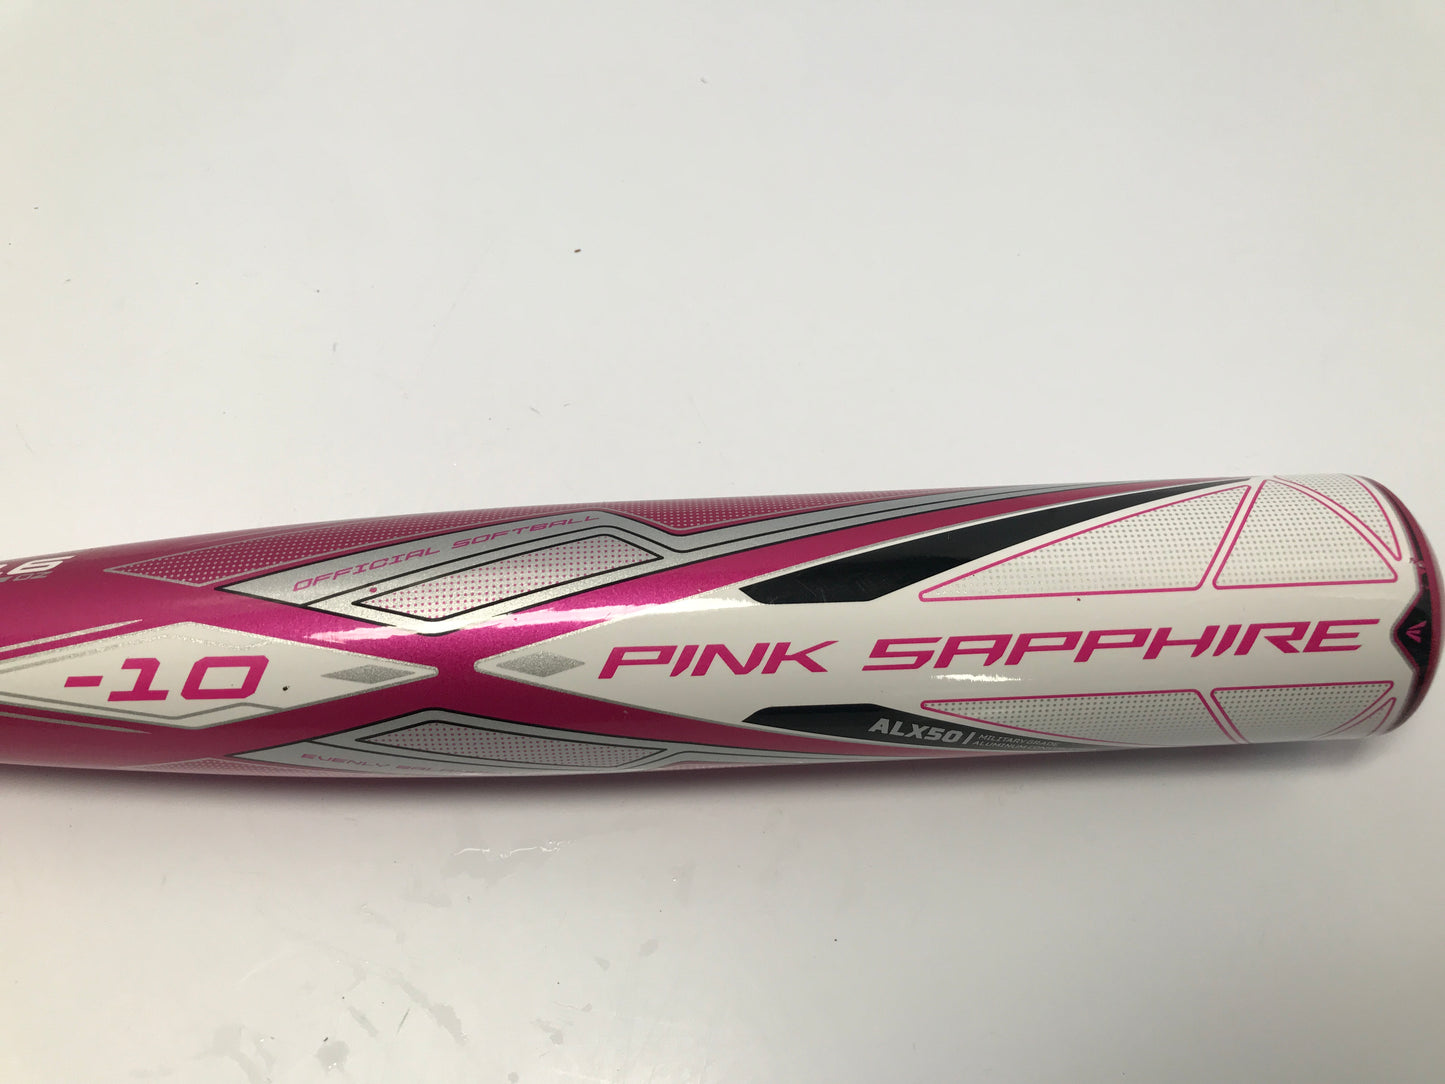 Baseball Bat 26in 16 03 Easton Pink Sapphire Military Grade Aluminum Evenly Balenced Like New